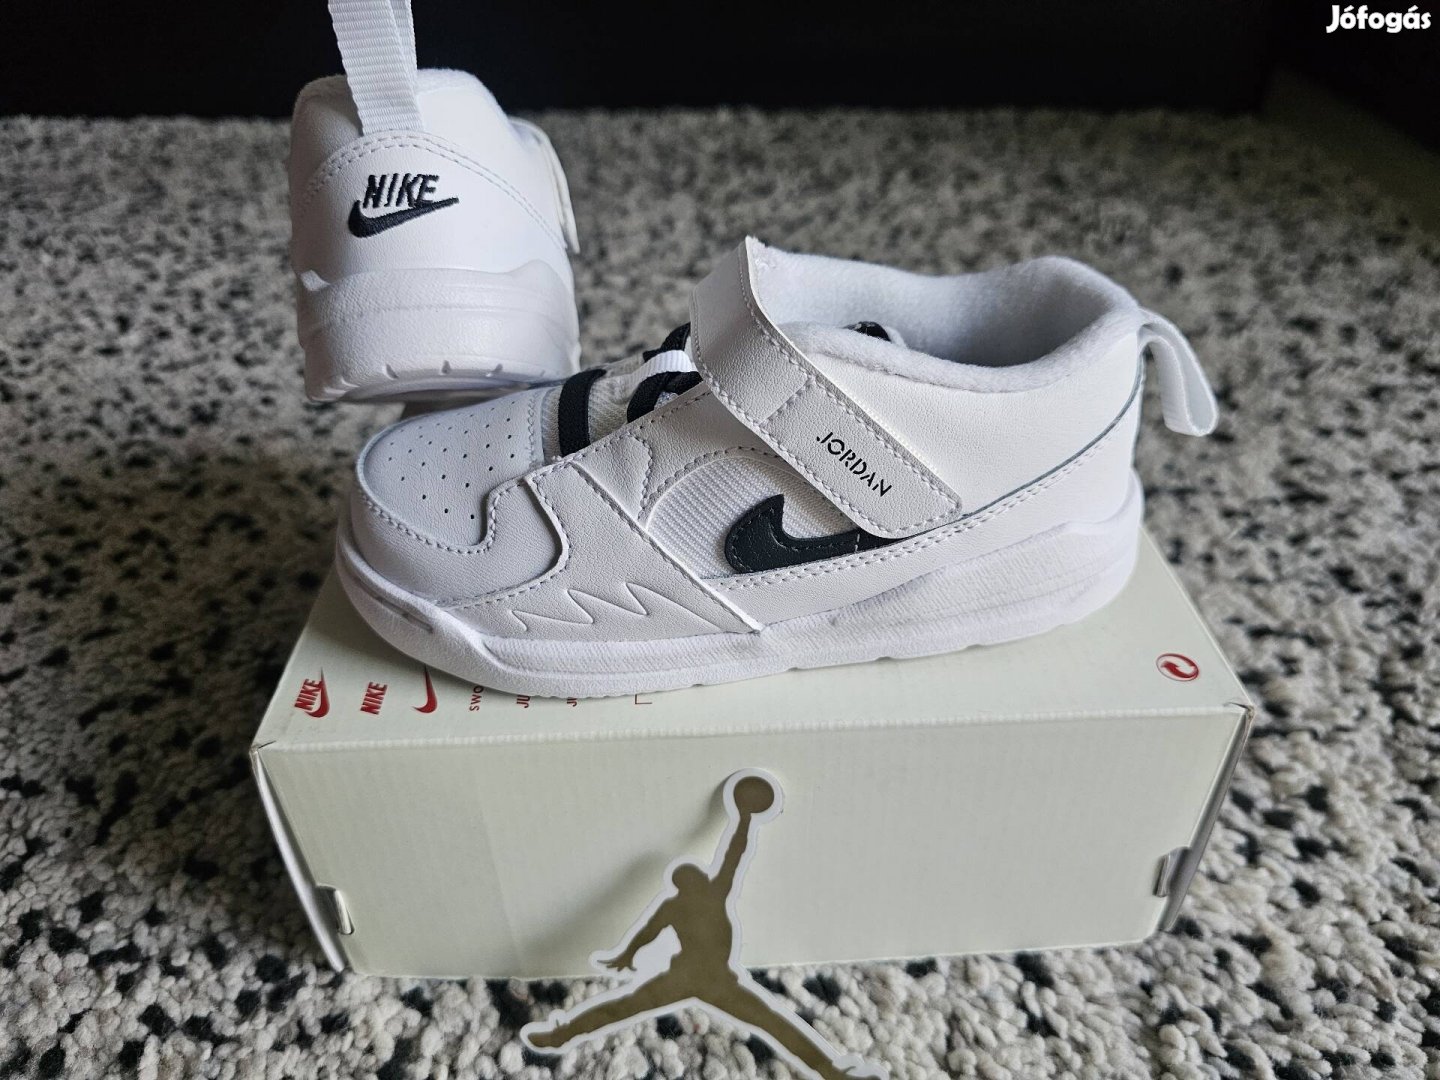 Nike Jordan Stadium gyerek 27-es utcai cipő. 